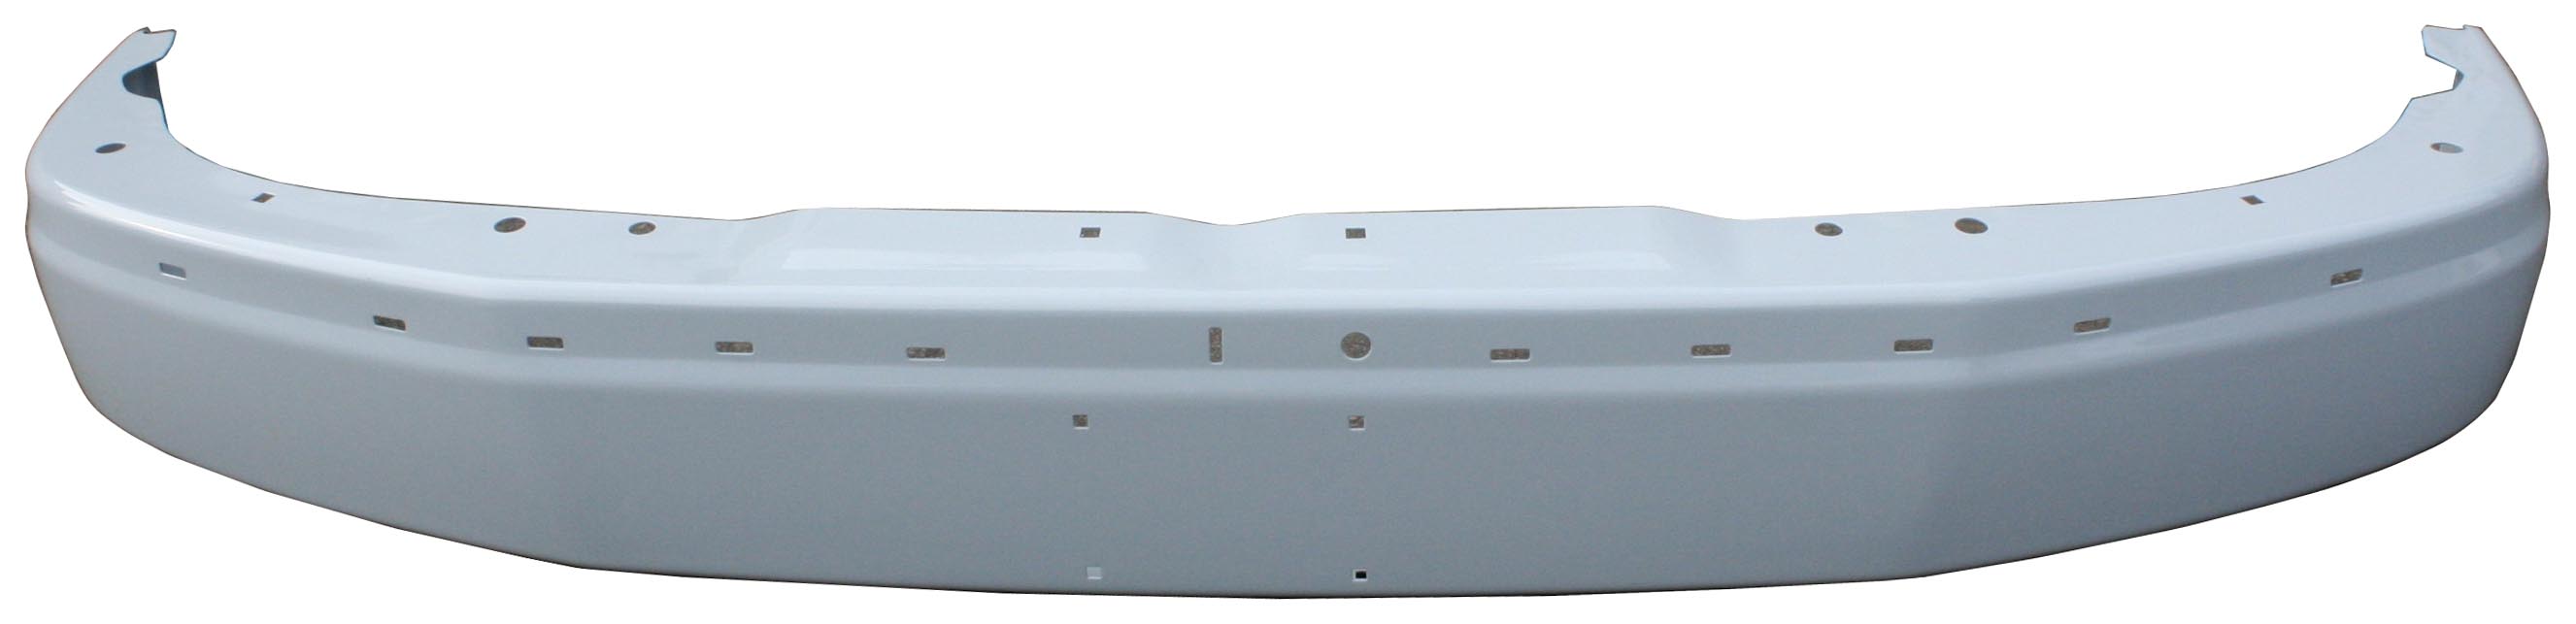 Aftermarket METAL FRONT BUMPERS for GMC - SAVANA 2500, SAVANA 2500,03-23,Front bumper face bar